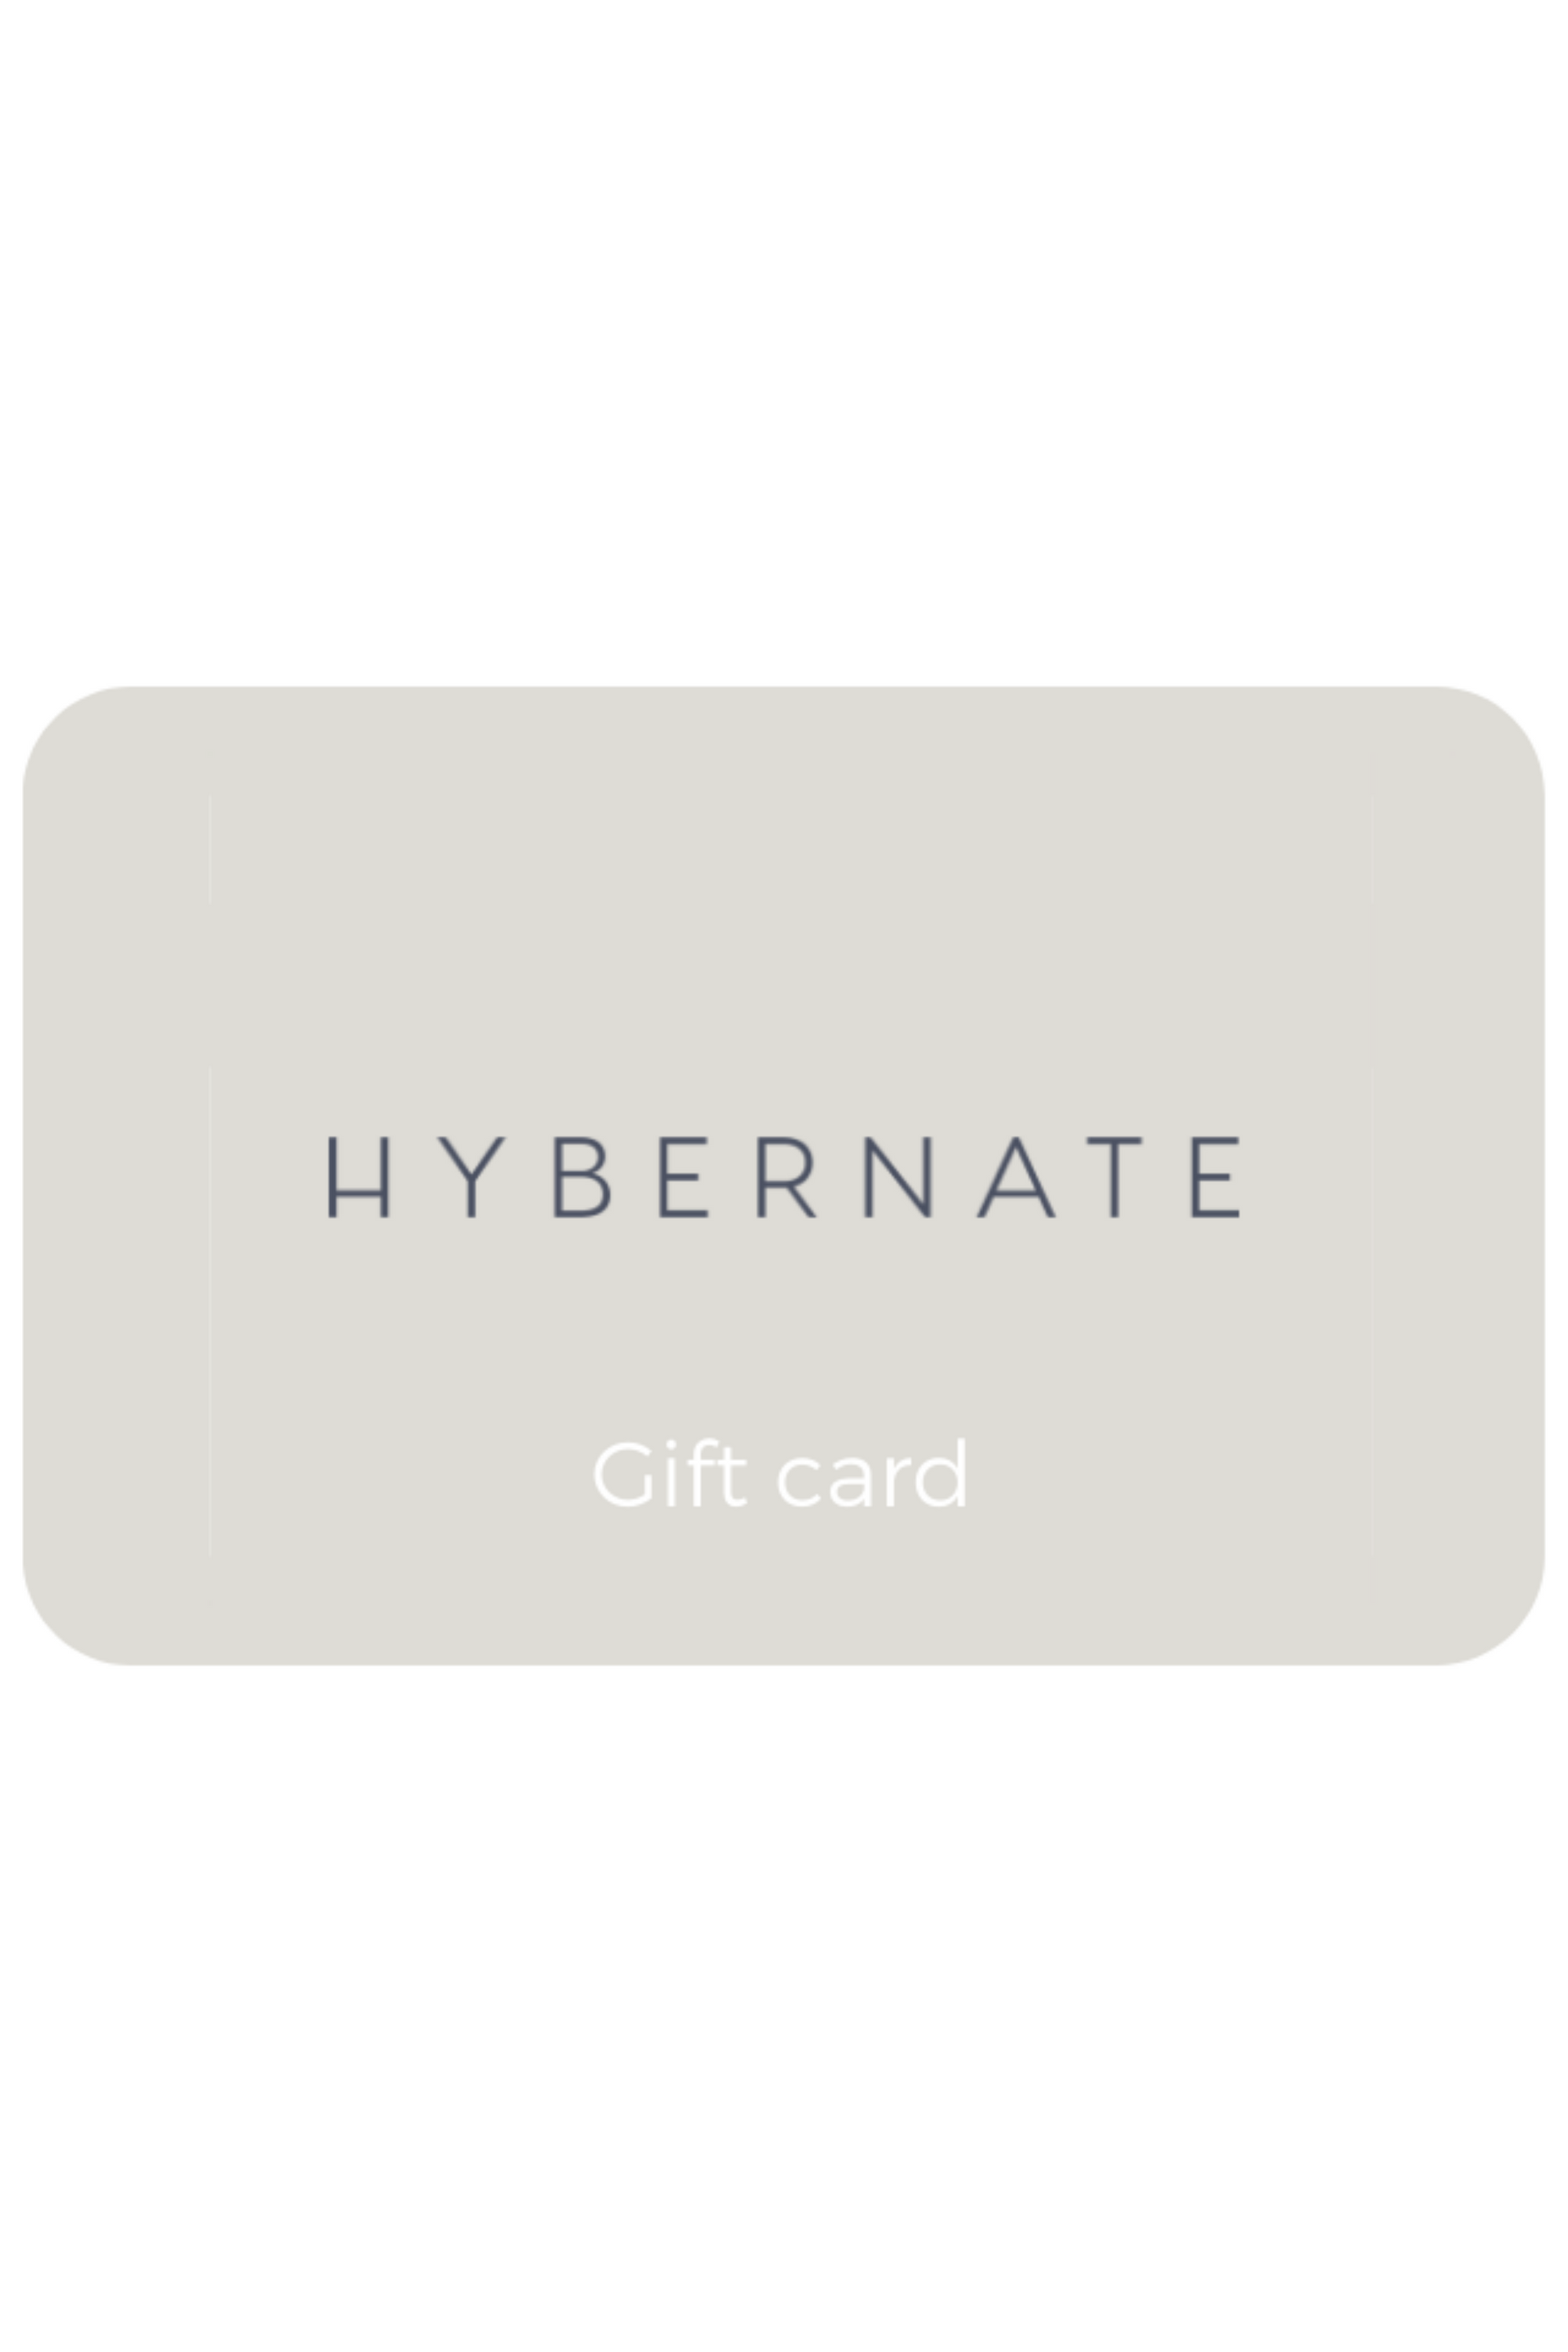 Hybernate Gift Card